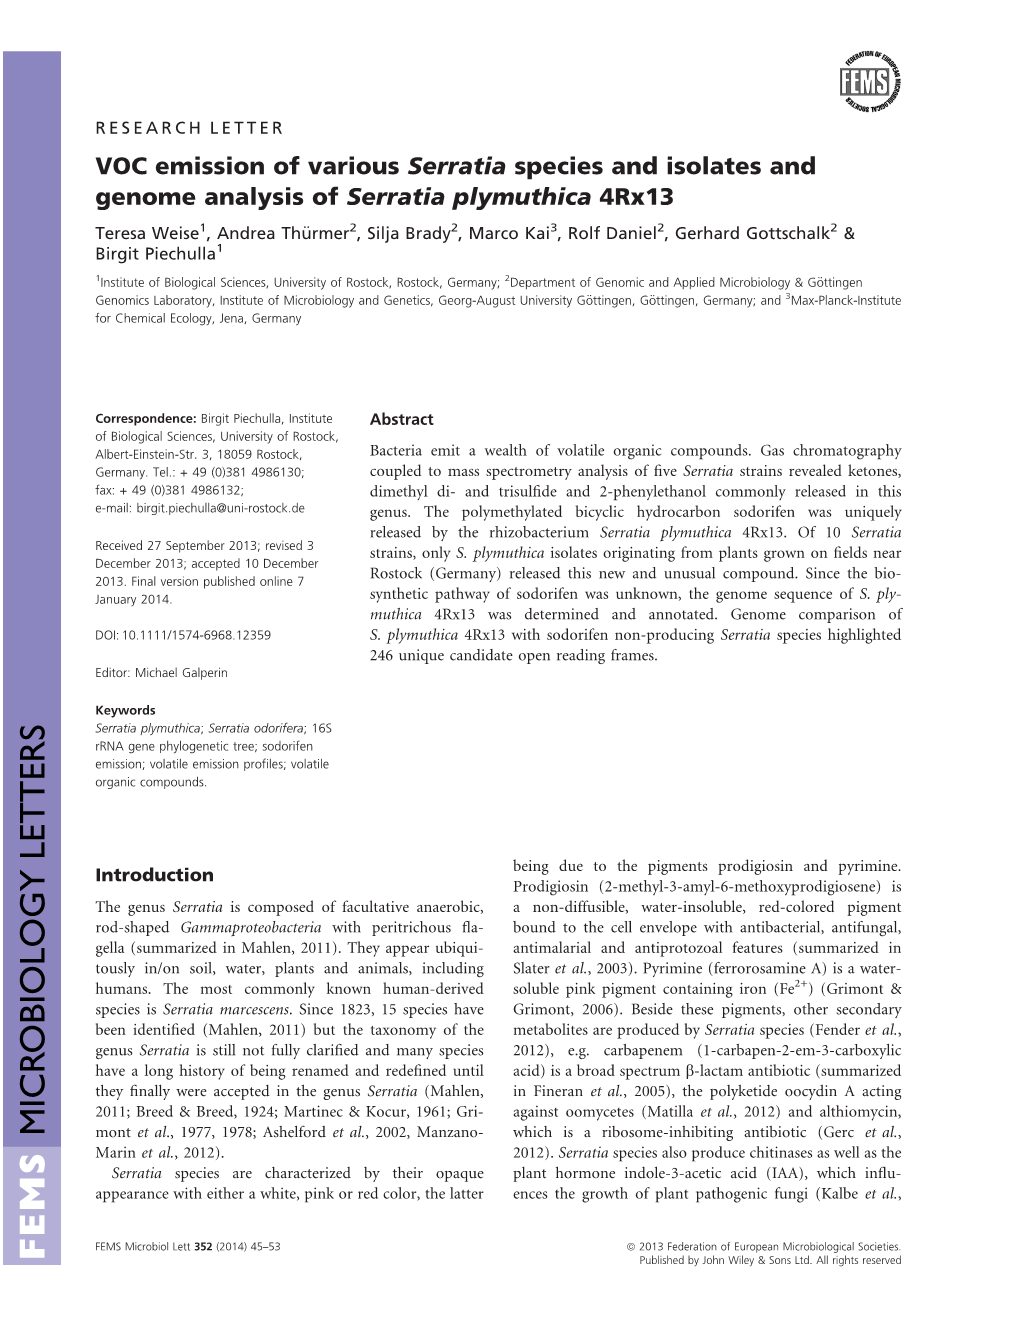 VOC Emission of Various Serratia Species and Isolates and Genome